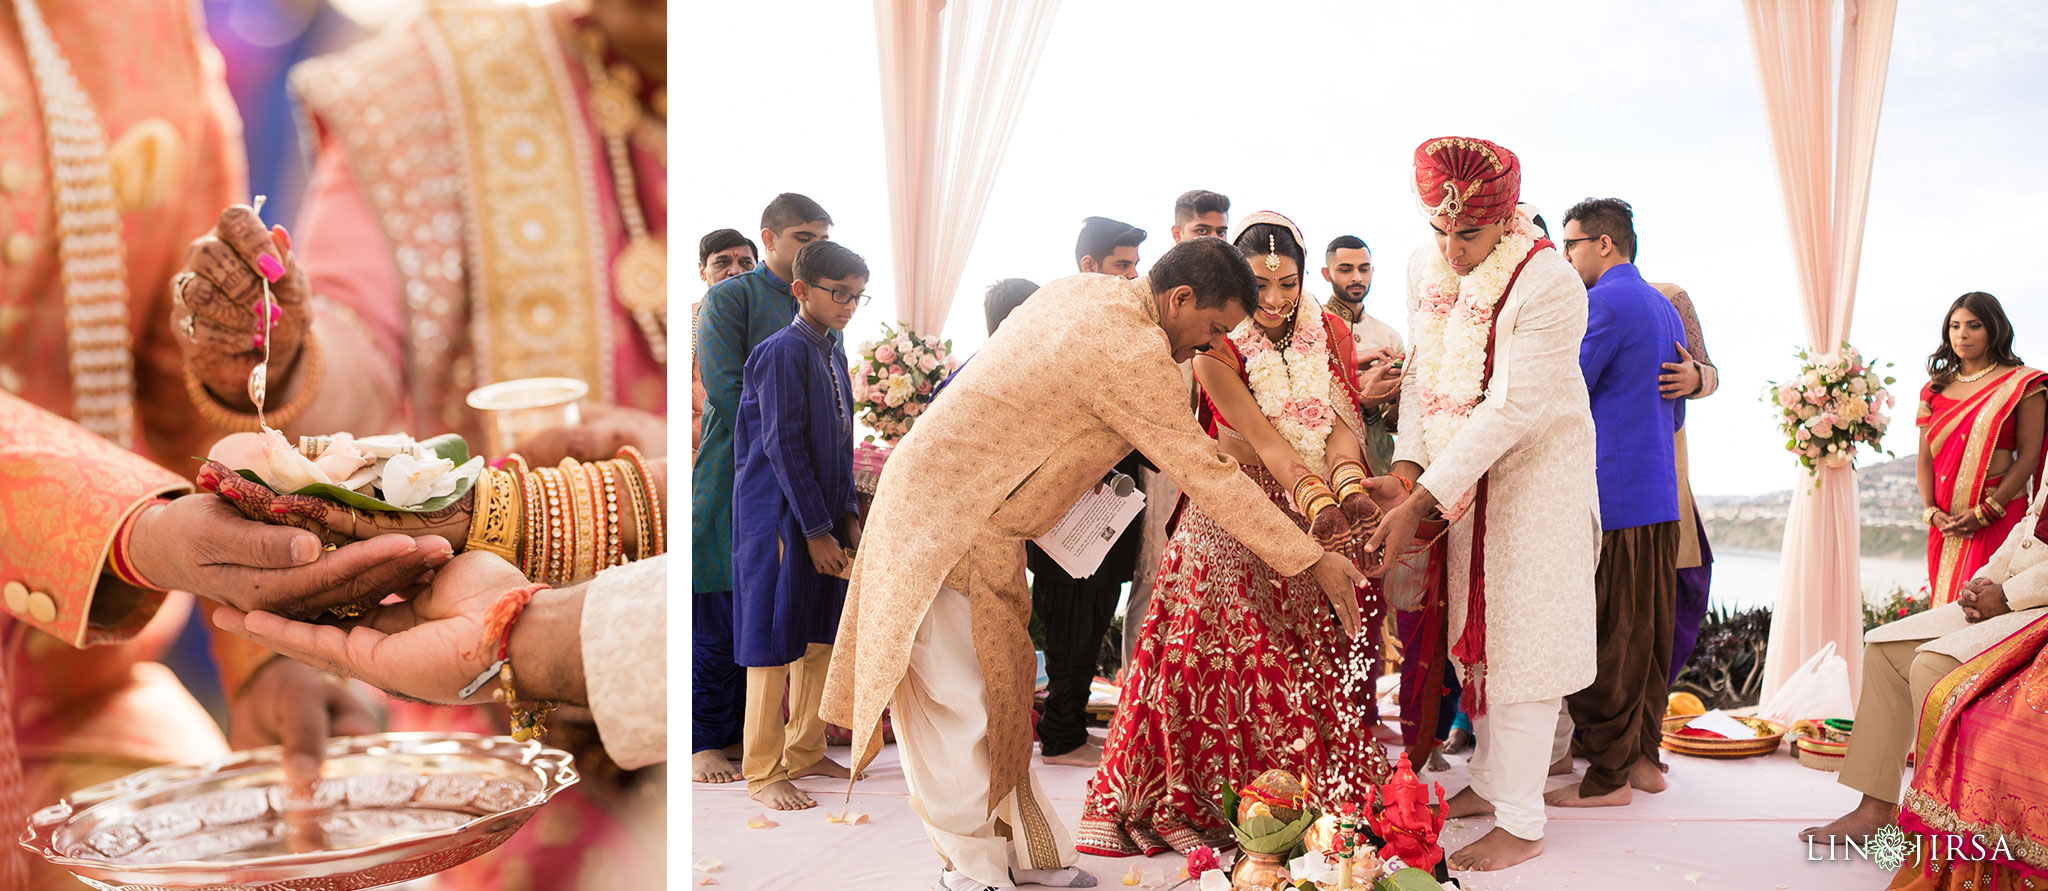 26 ritz carlton laguna niguel indian wedding ceremony photography